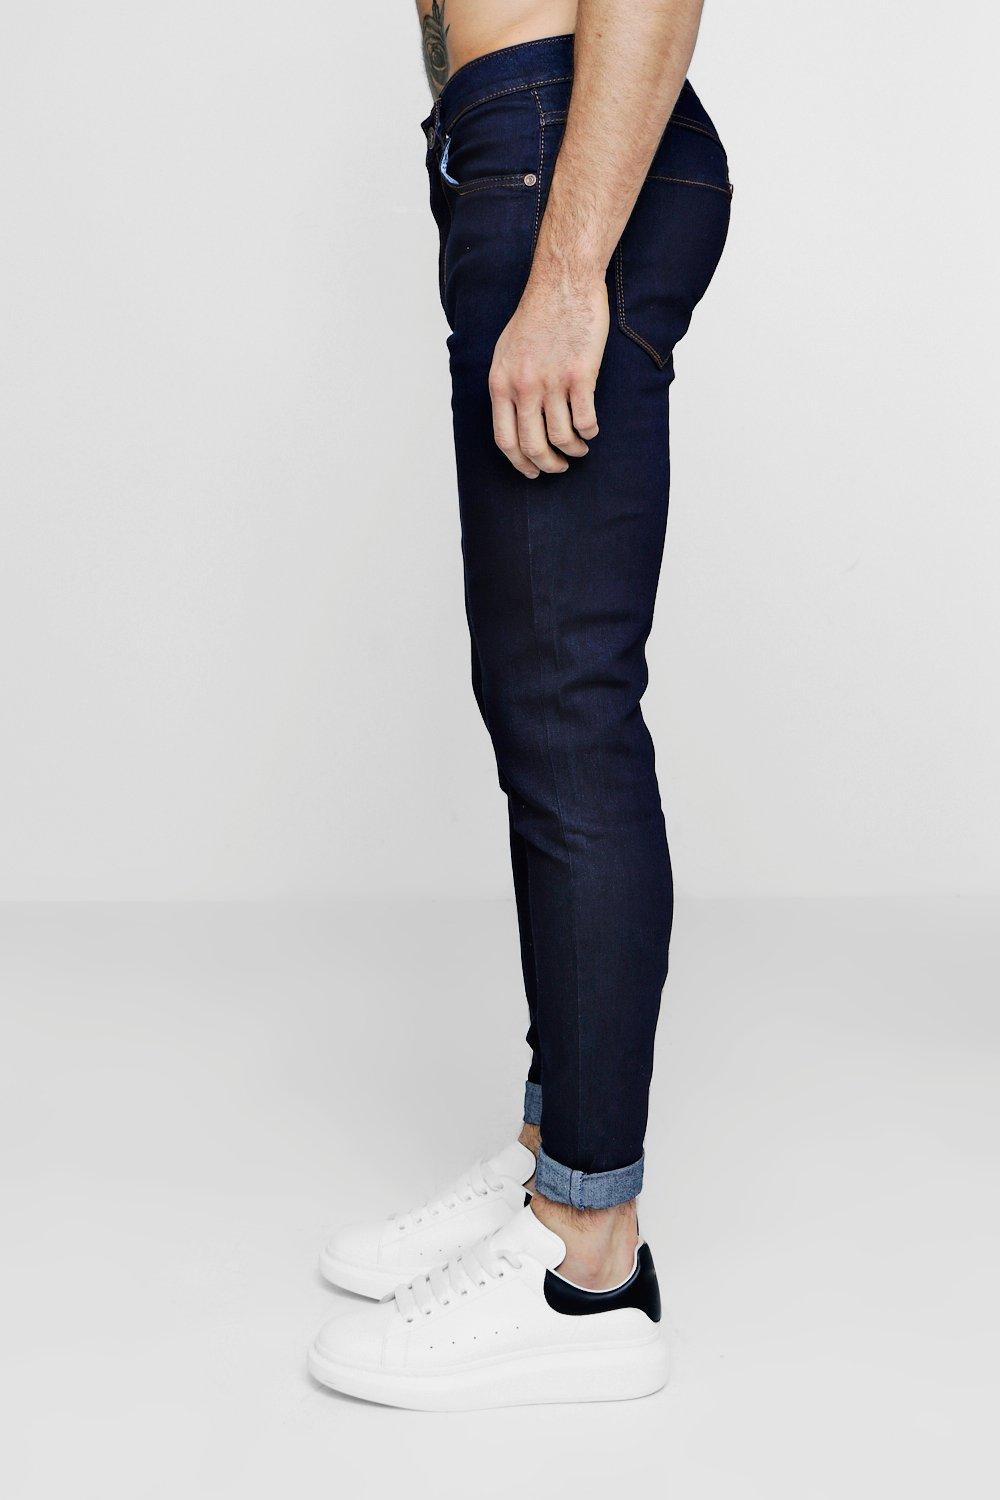 smart indigo jeans